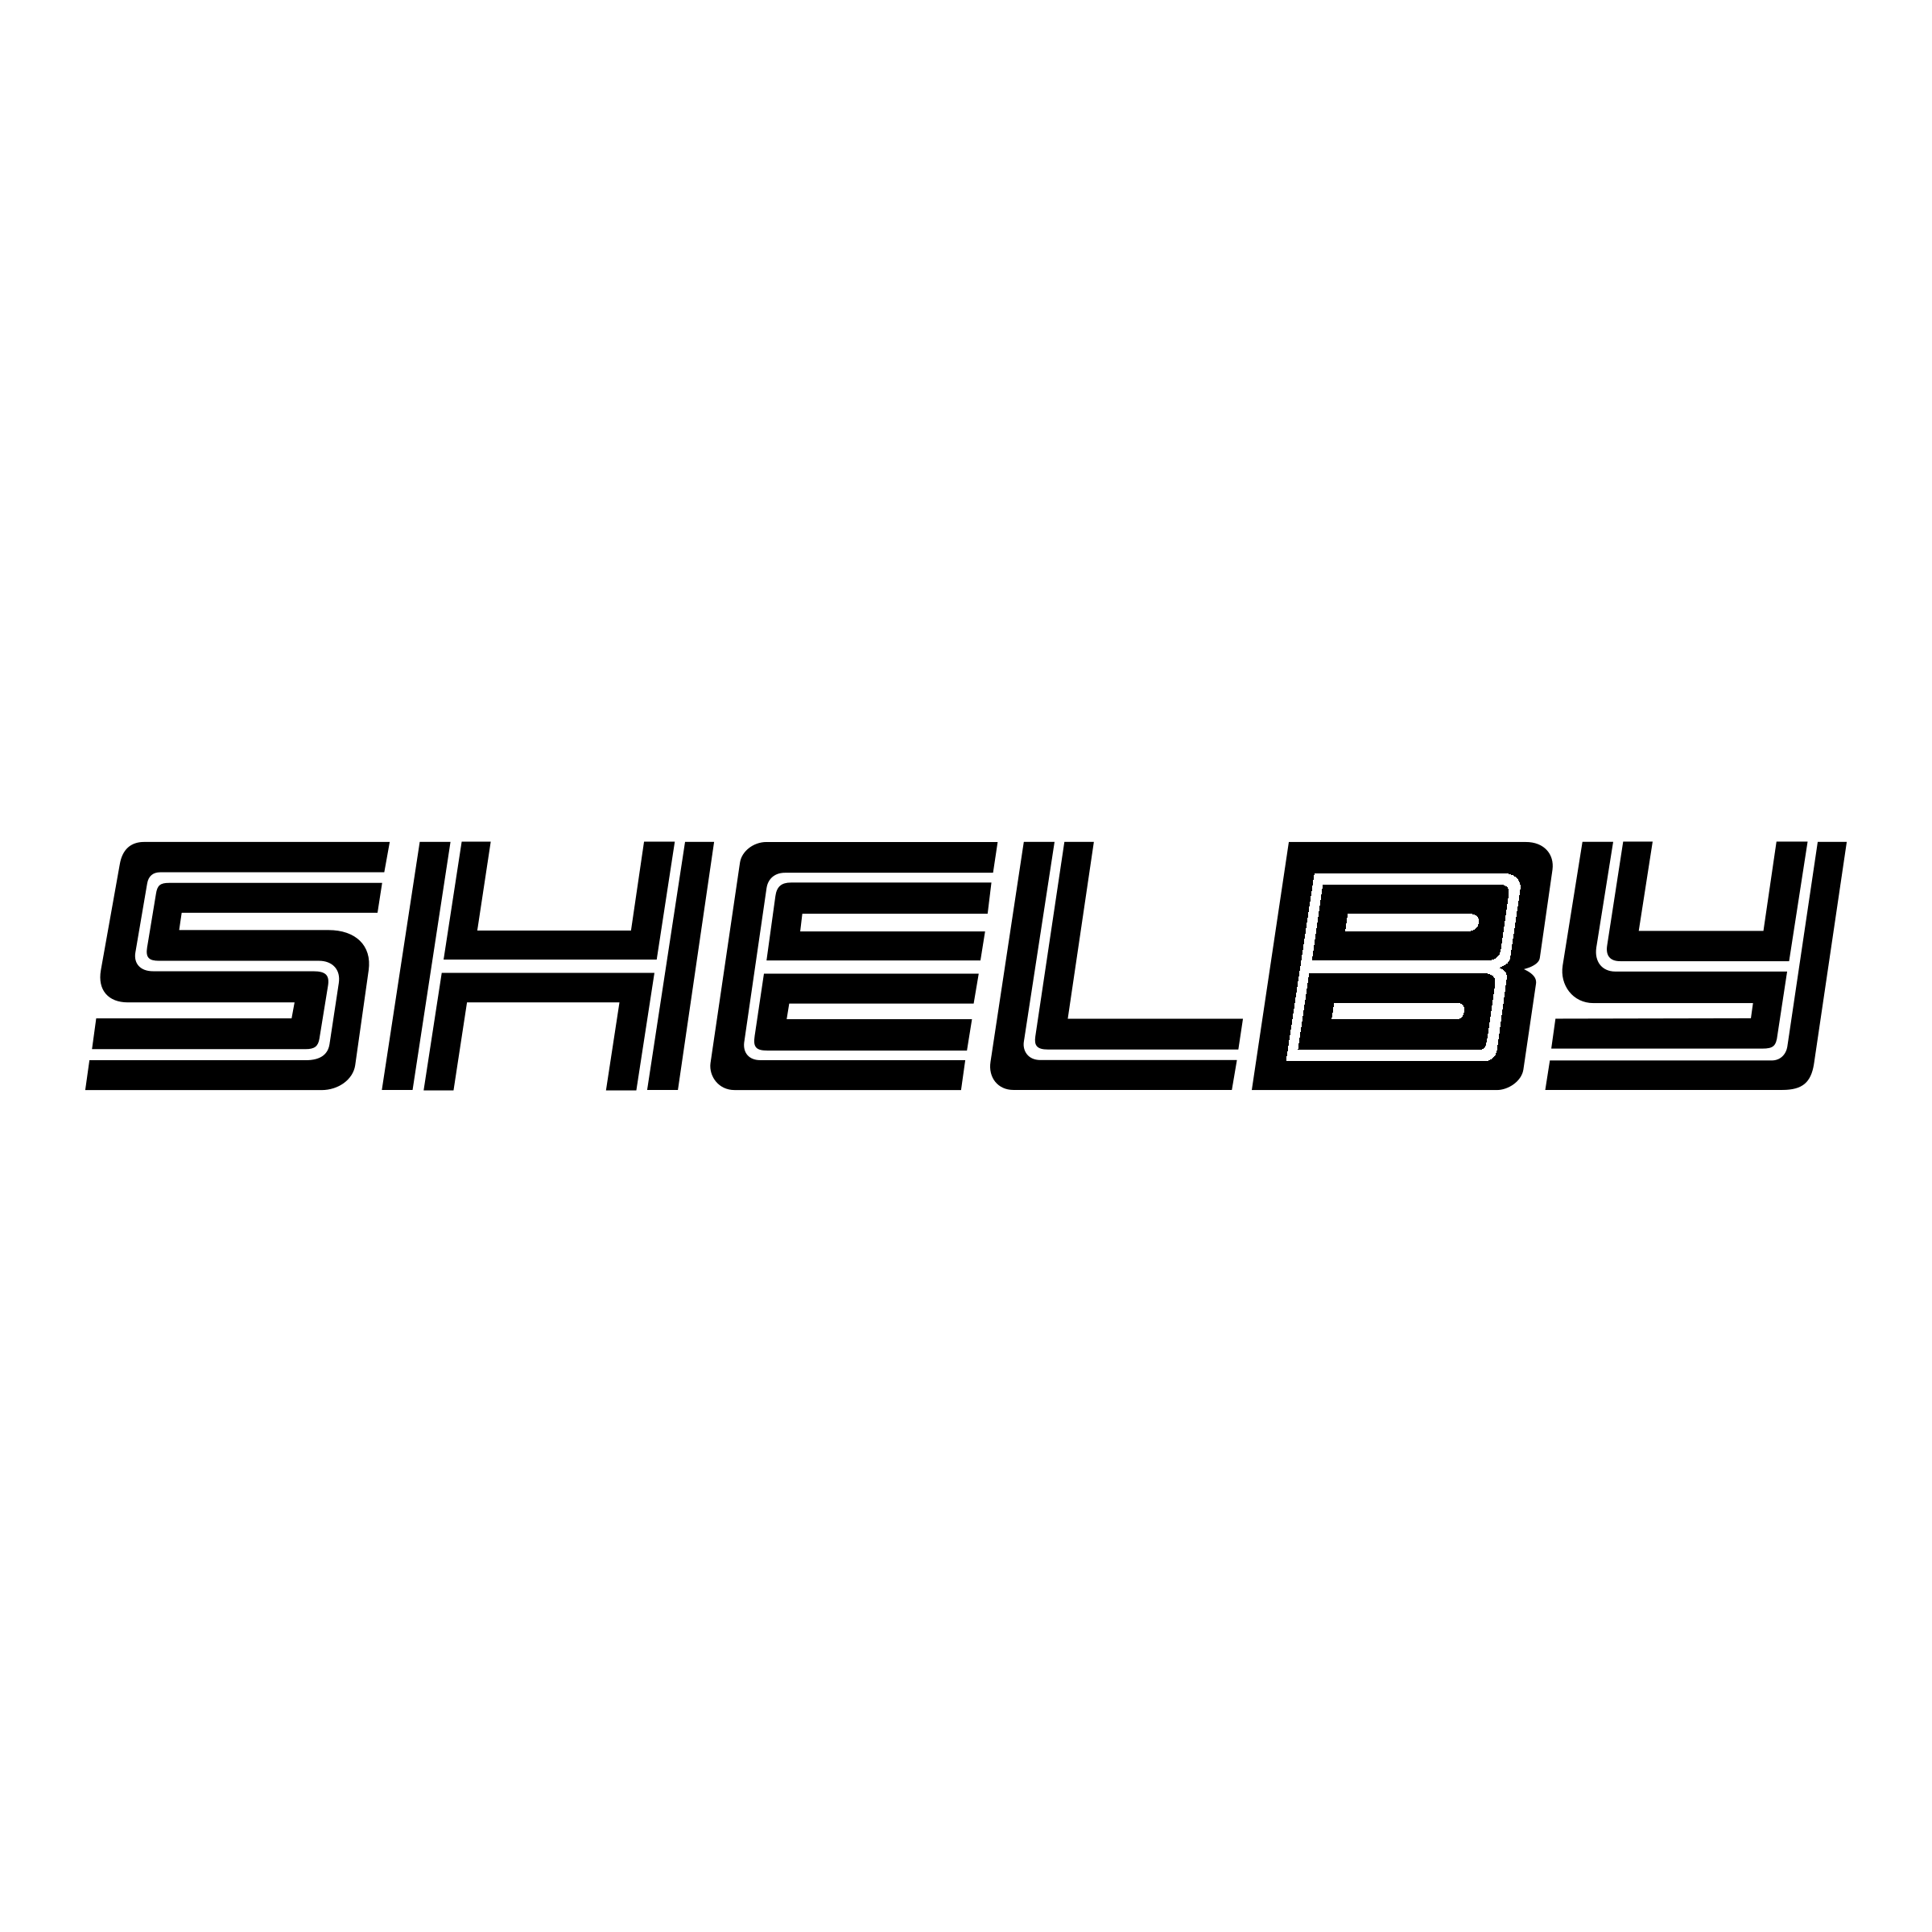 White Shelby Logo - Shelby Logo Black And White. ED. Logos, Shelby logo